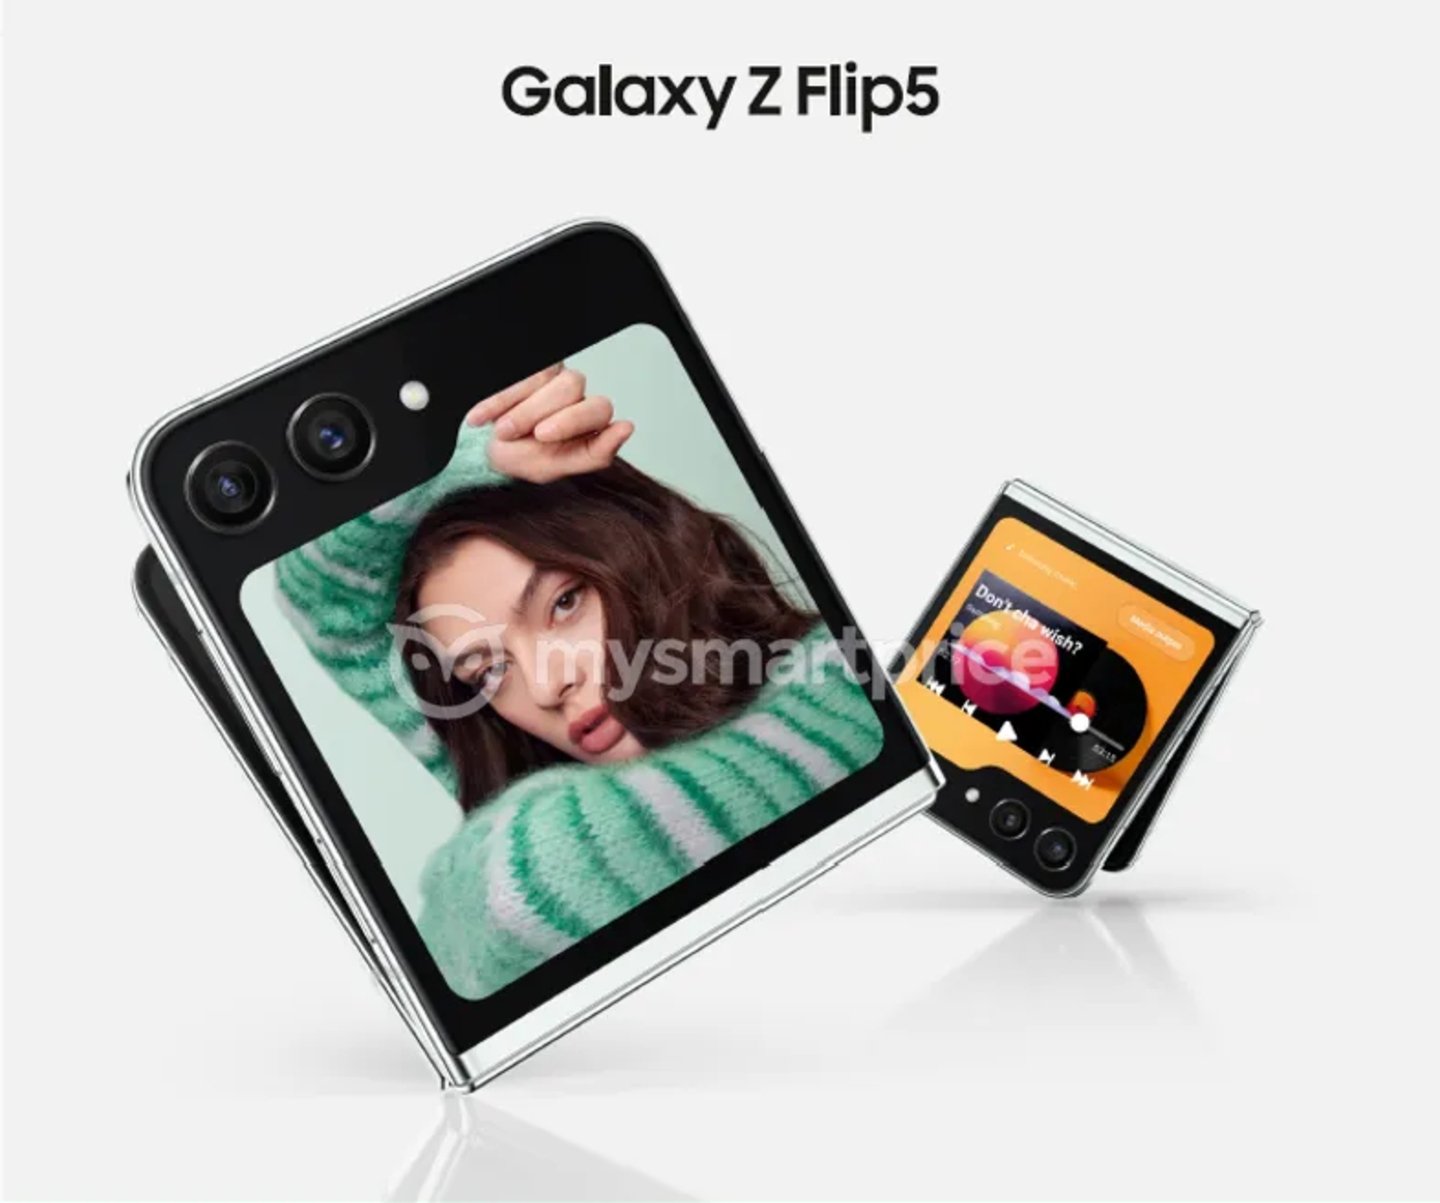 Galaxy Z Flip5 imagen prensa